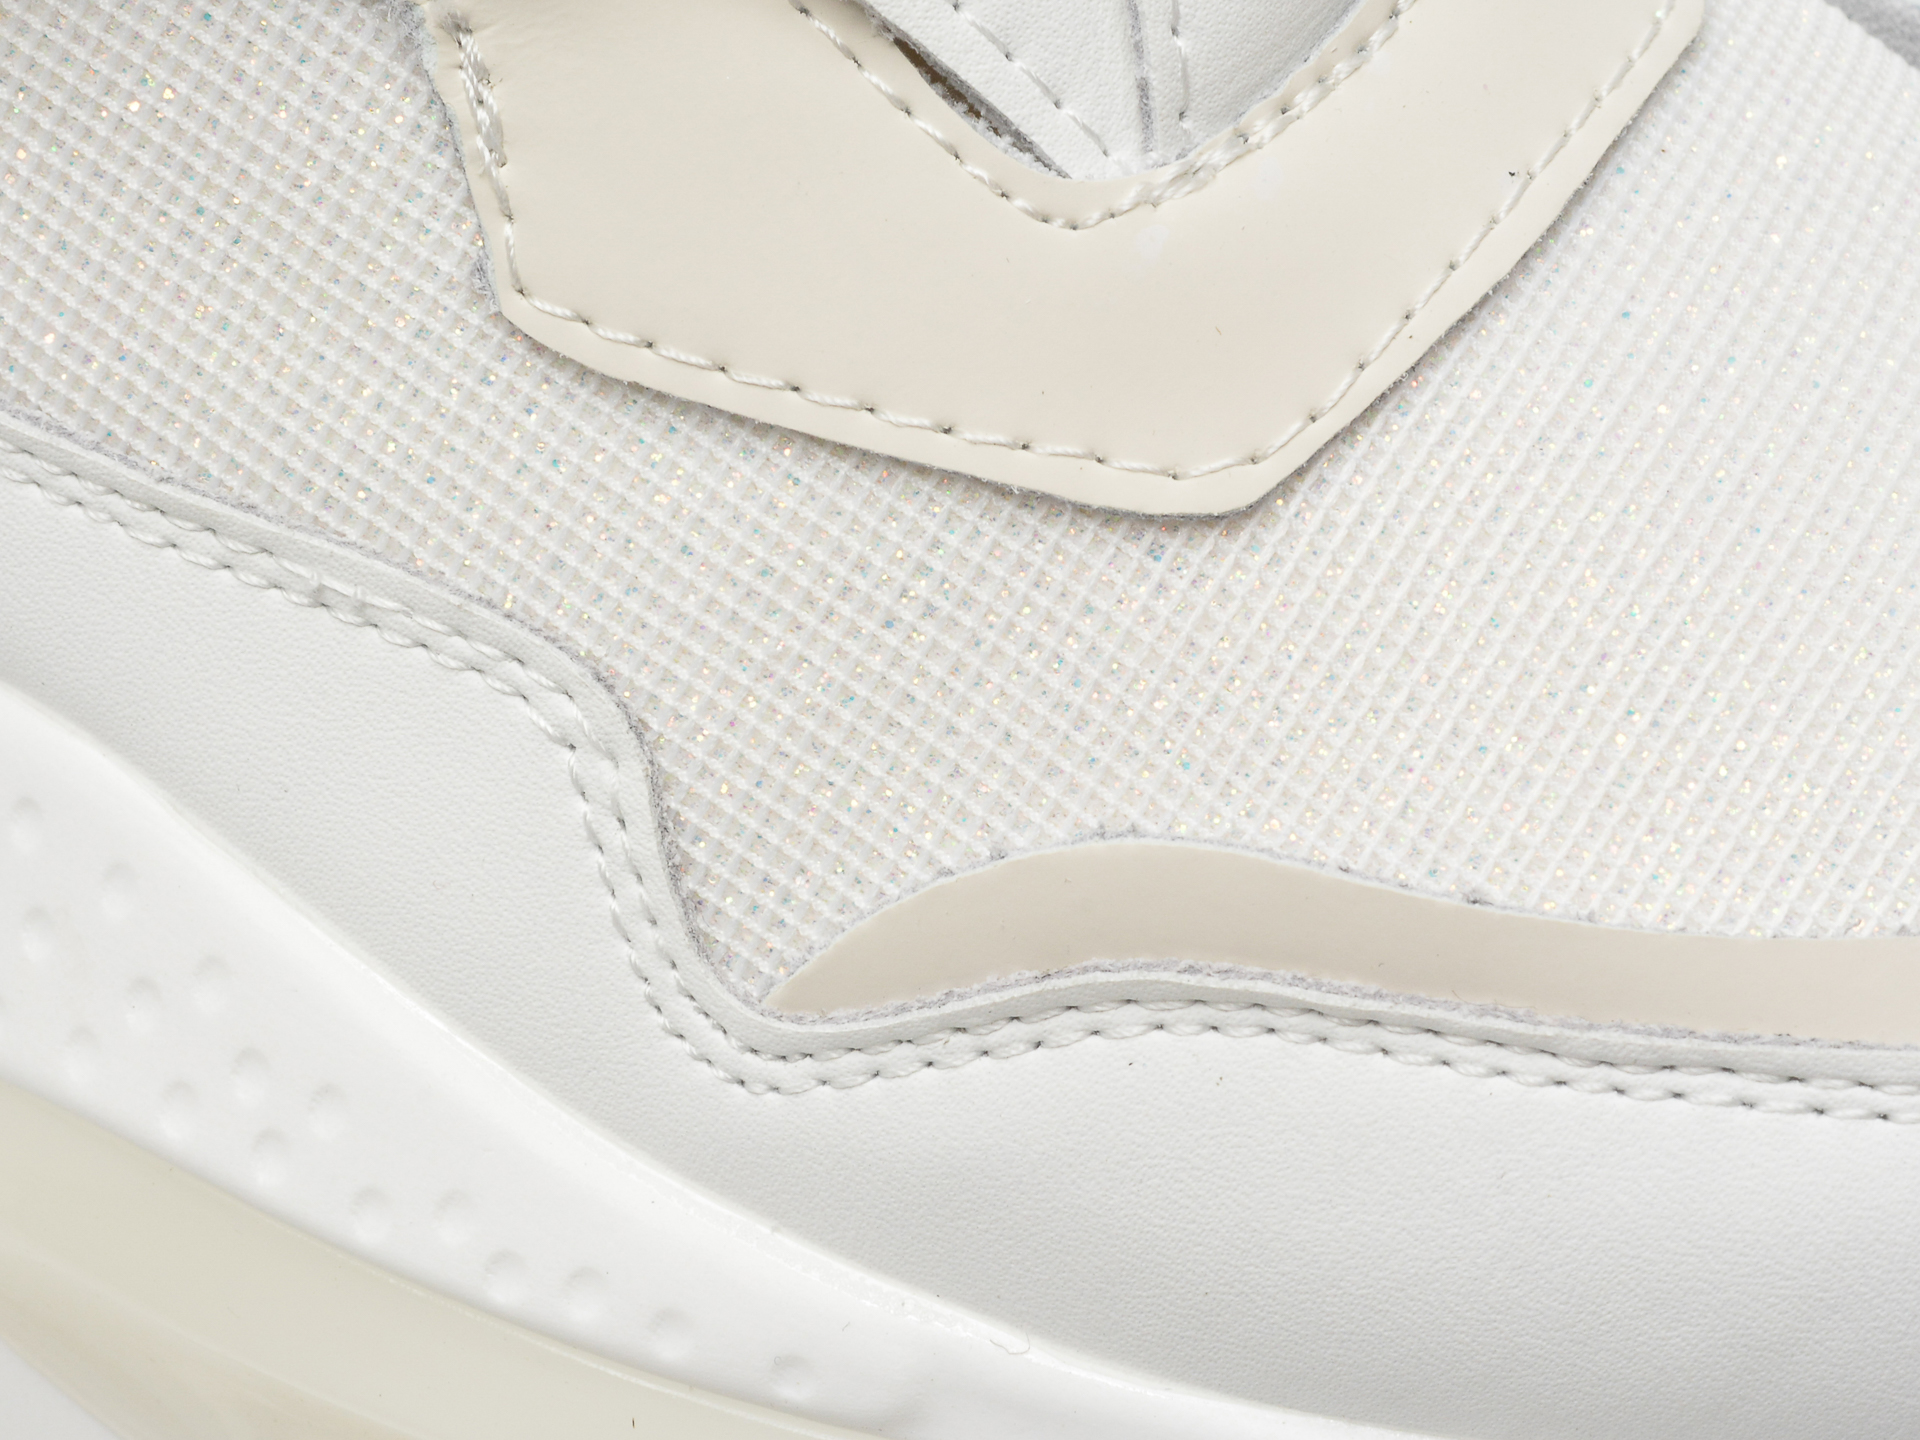 Poze Pantofi EPICA albi, 816, din piele naturala si material textil otter.ro